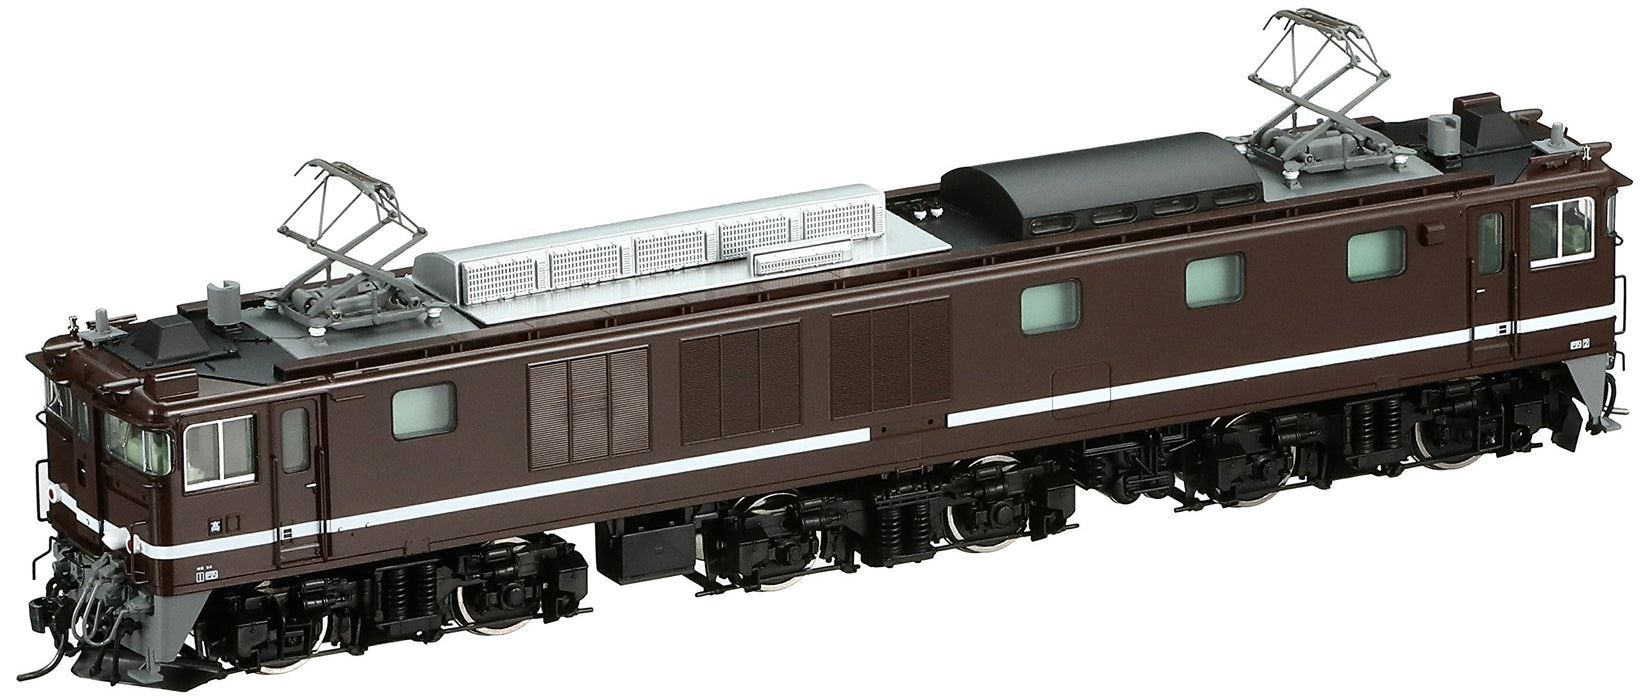 Tomytec Prestige Railway Model EF64 1000 Electric Locomotive HO Gauge Brown